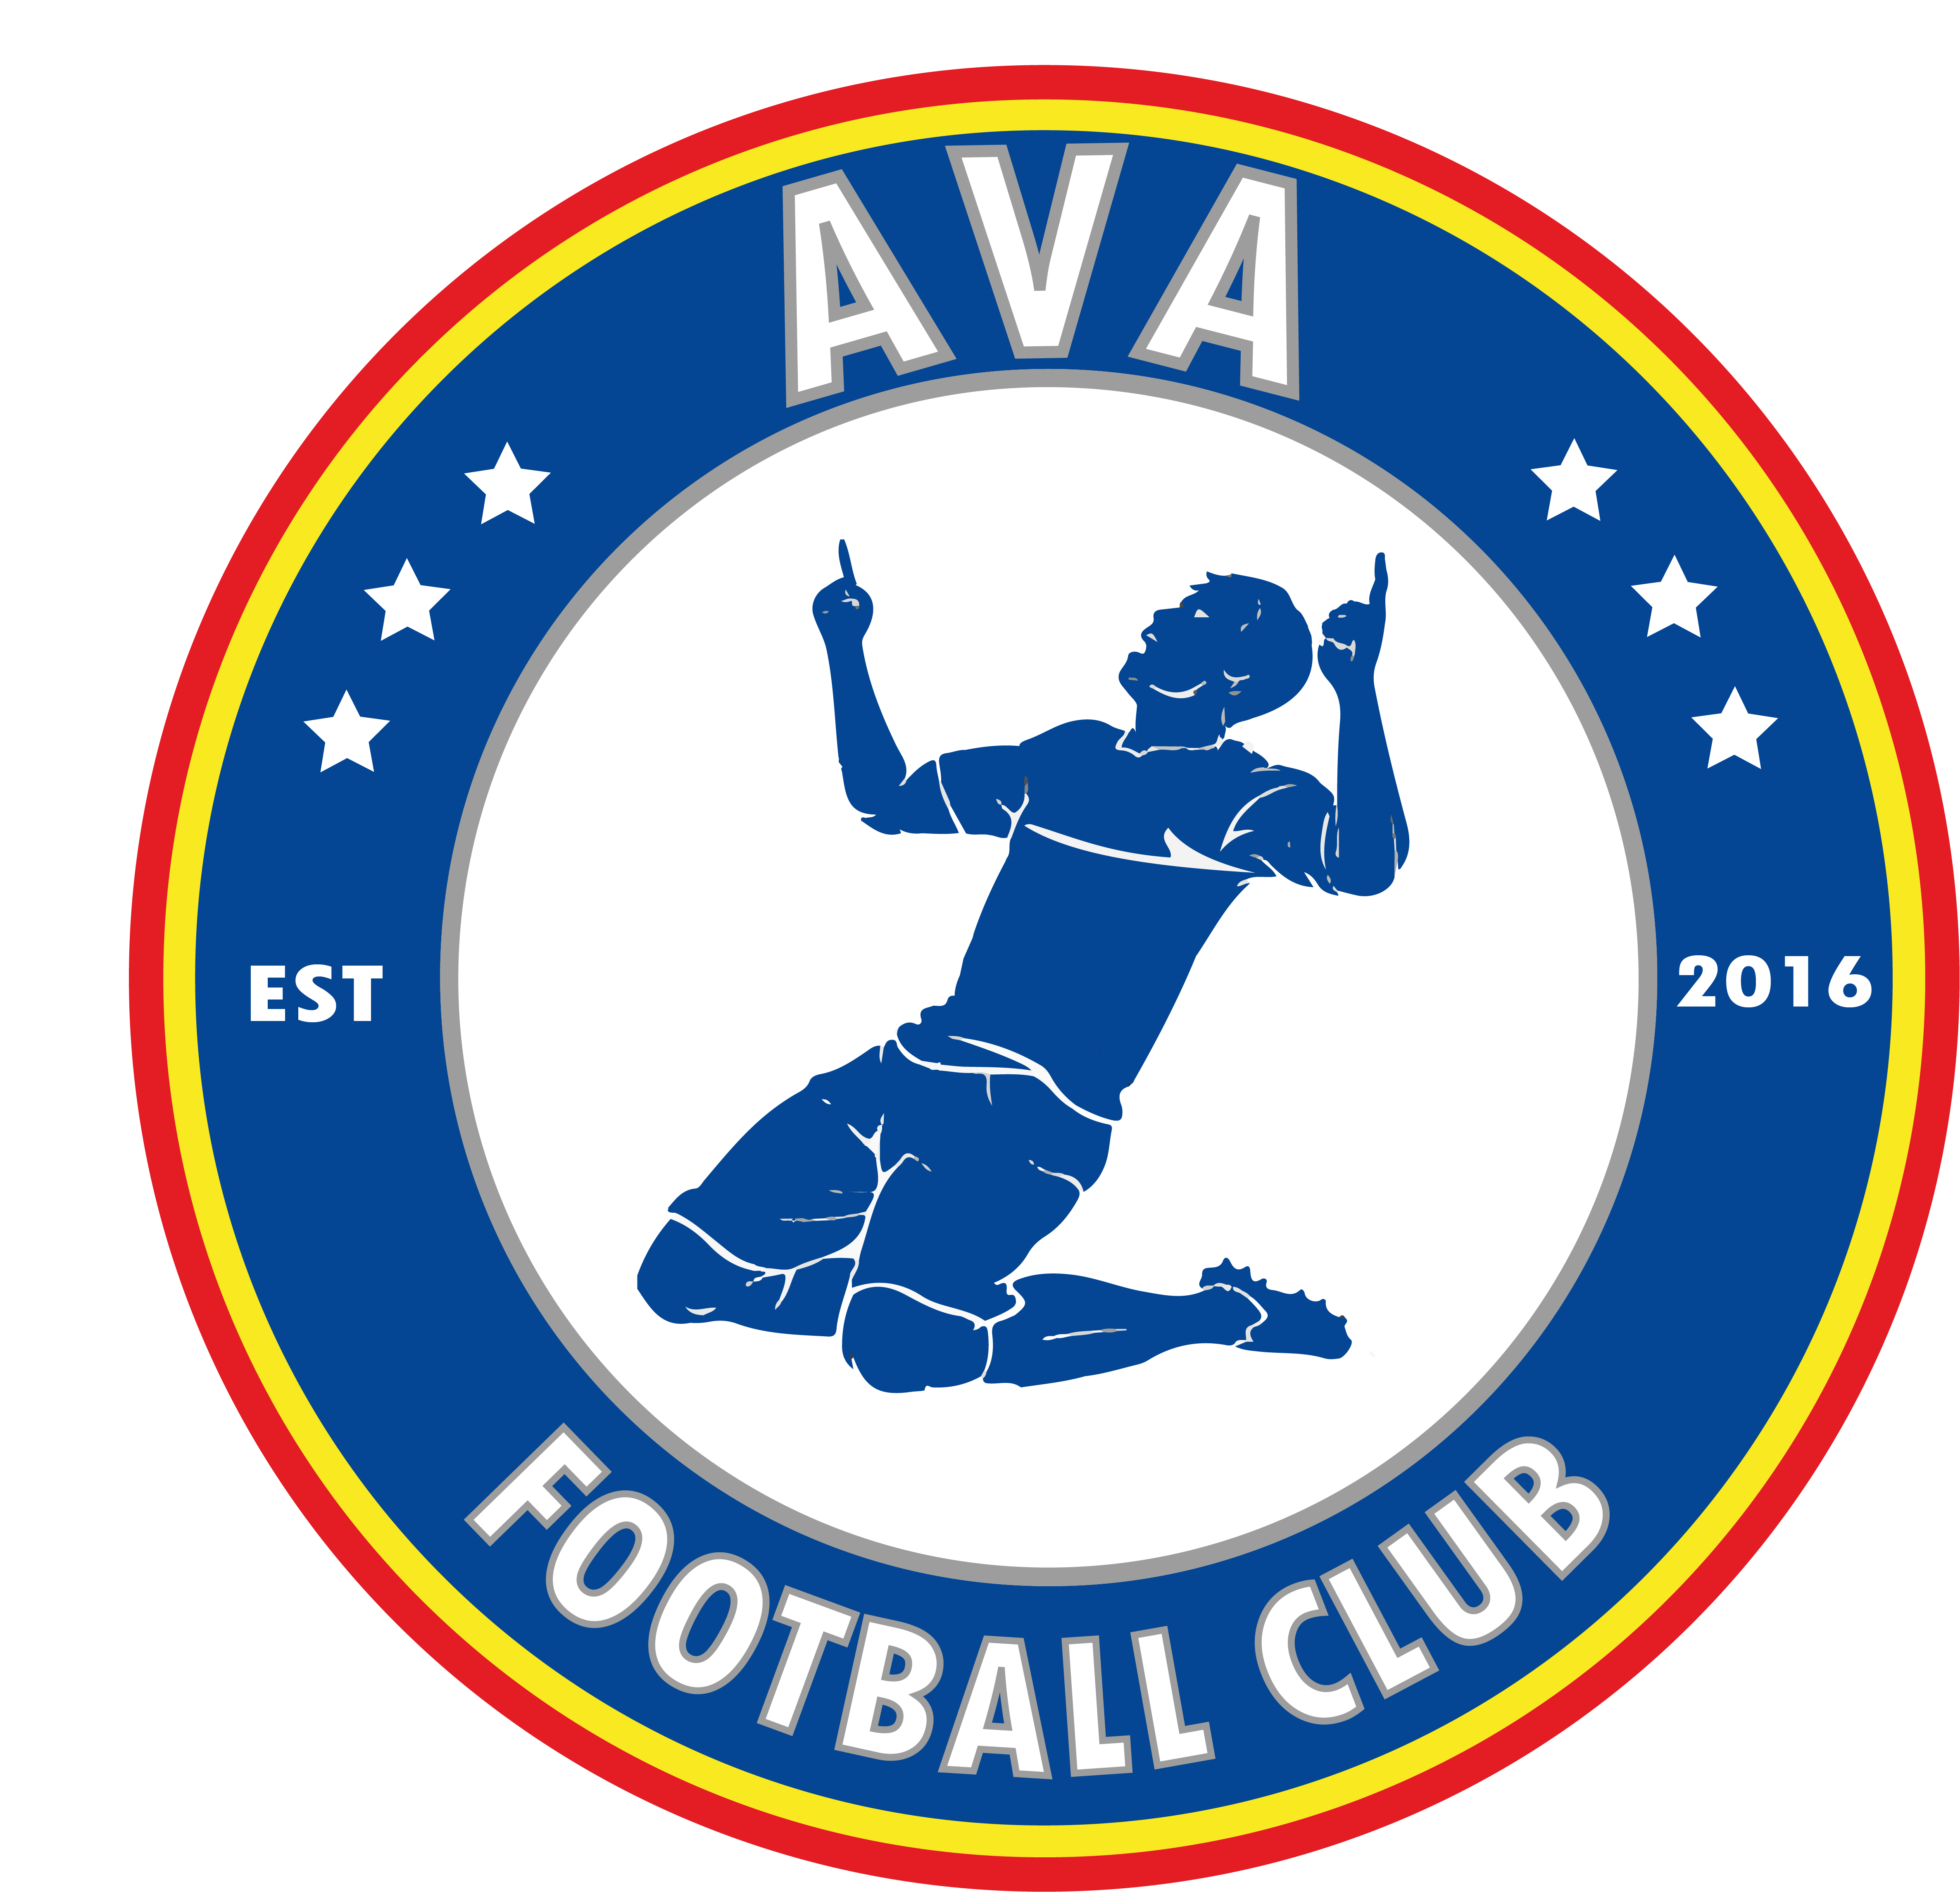 Ava Football Club